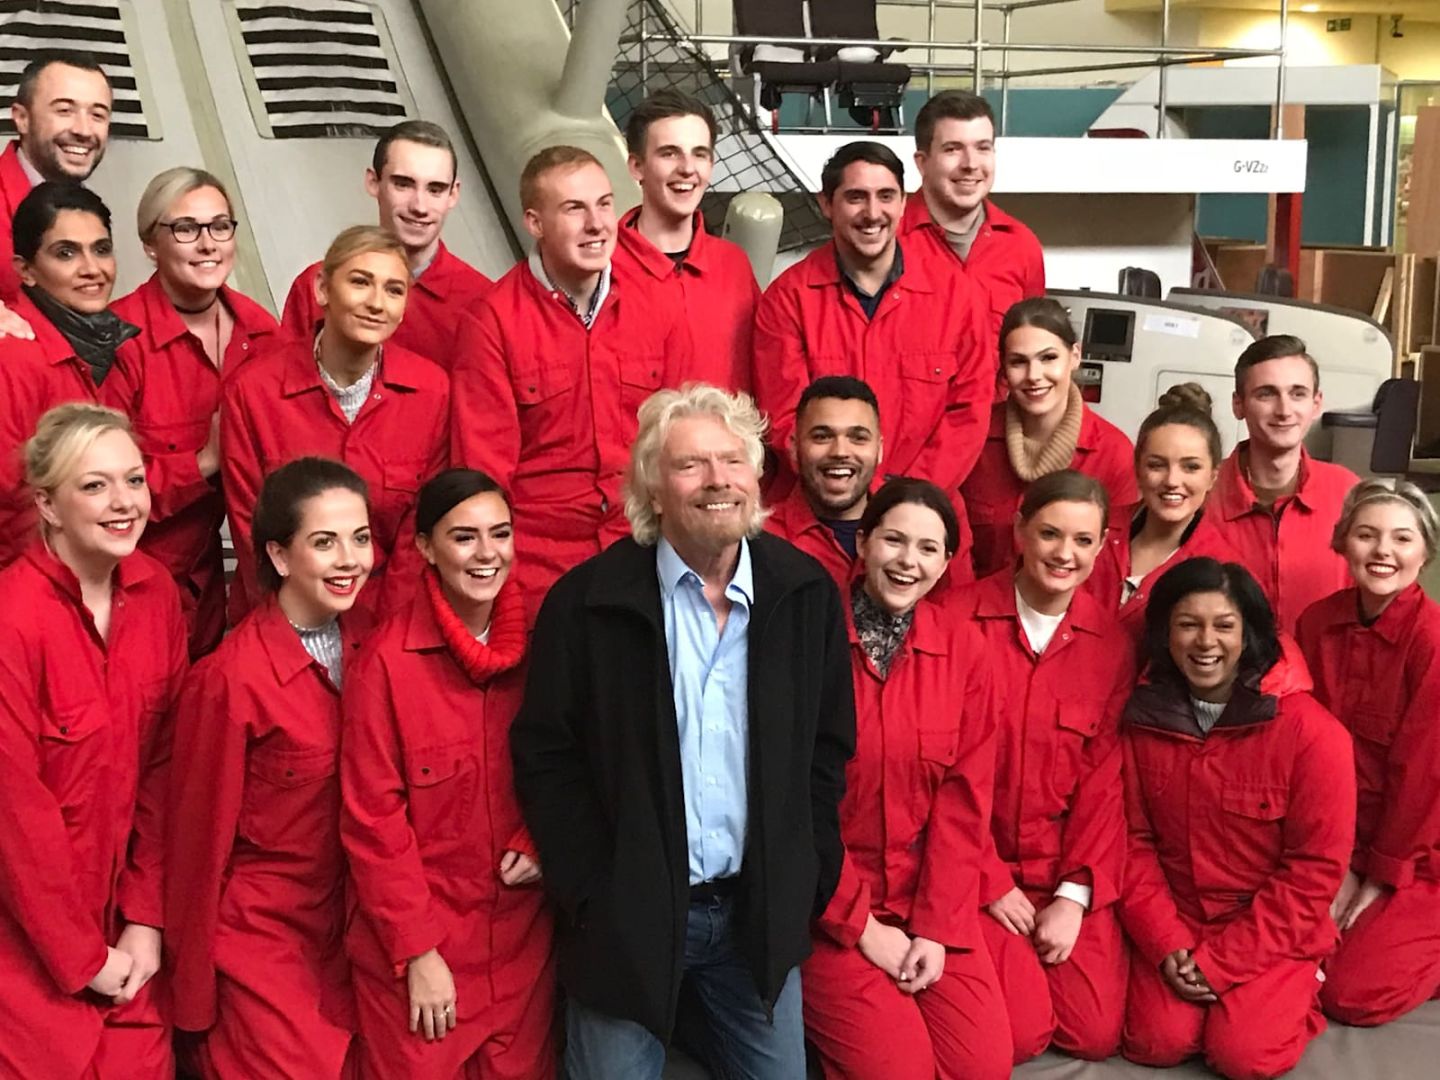 Richard Branson with Virgin Atlantic cabin crew in training